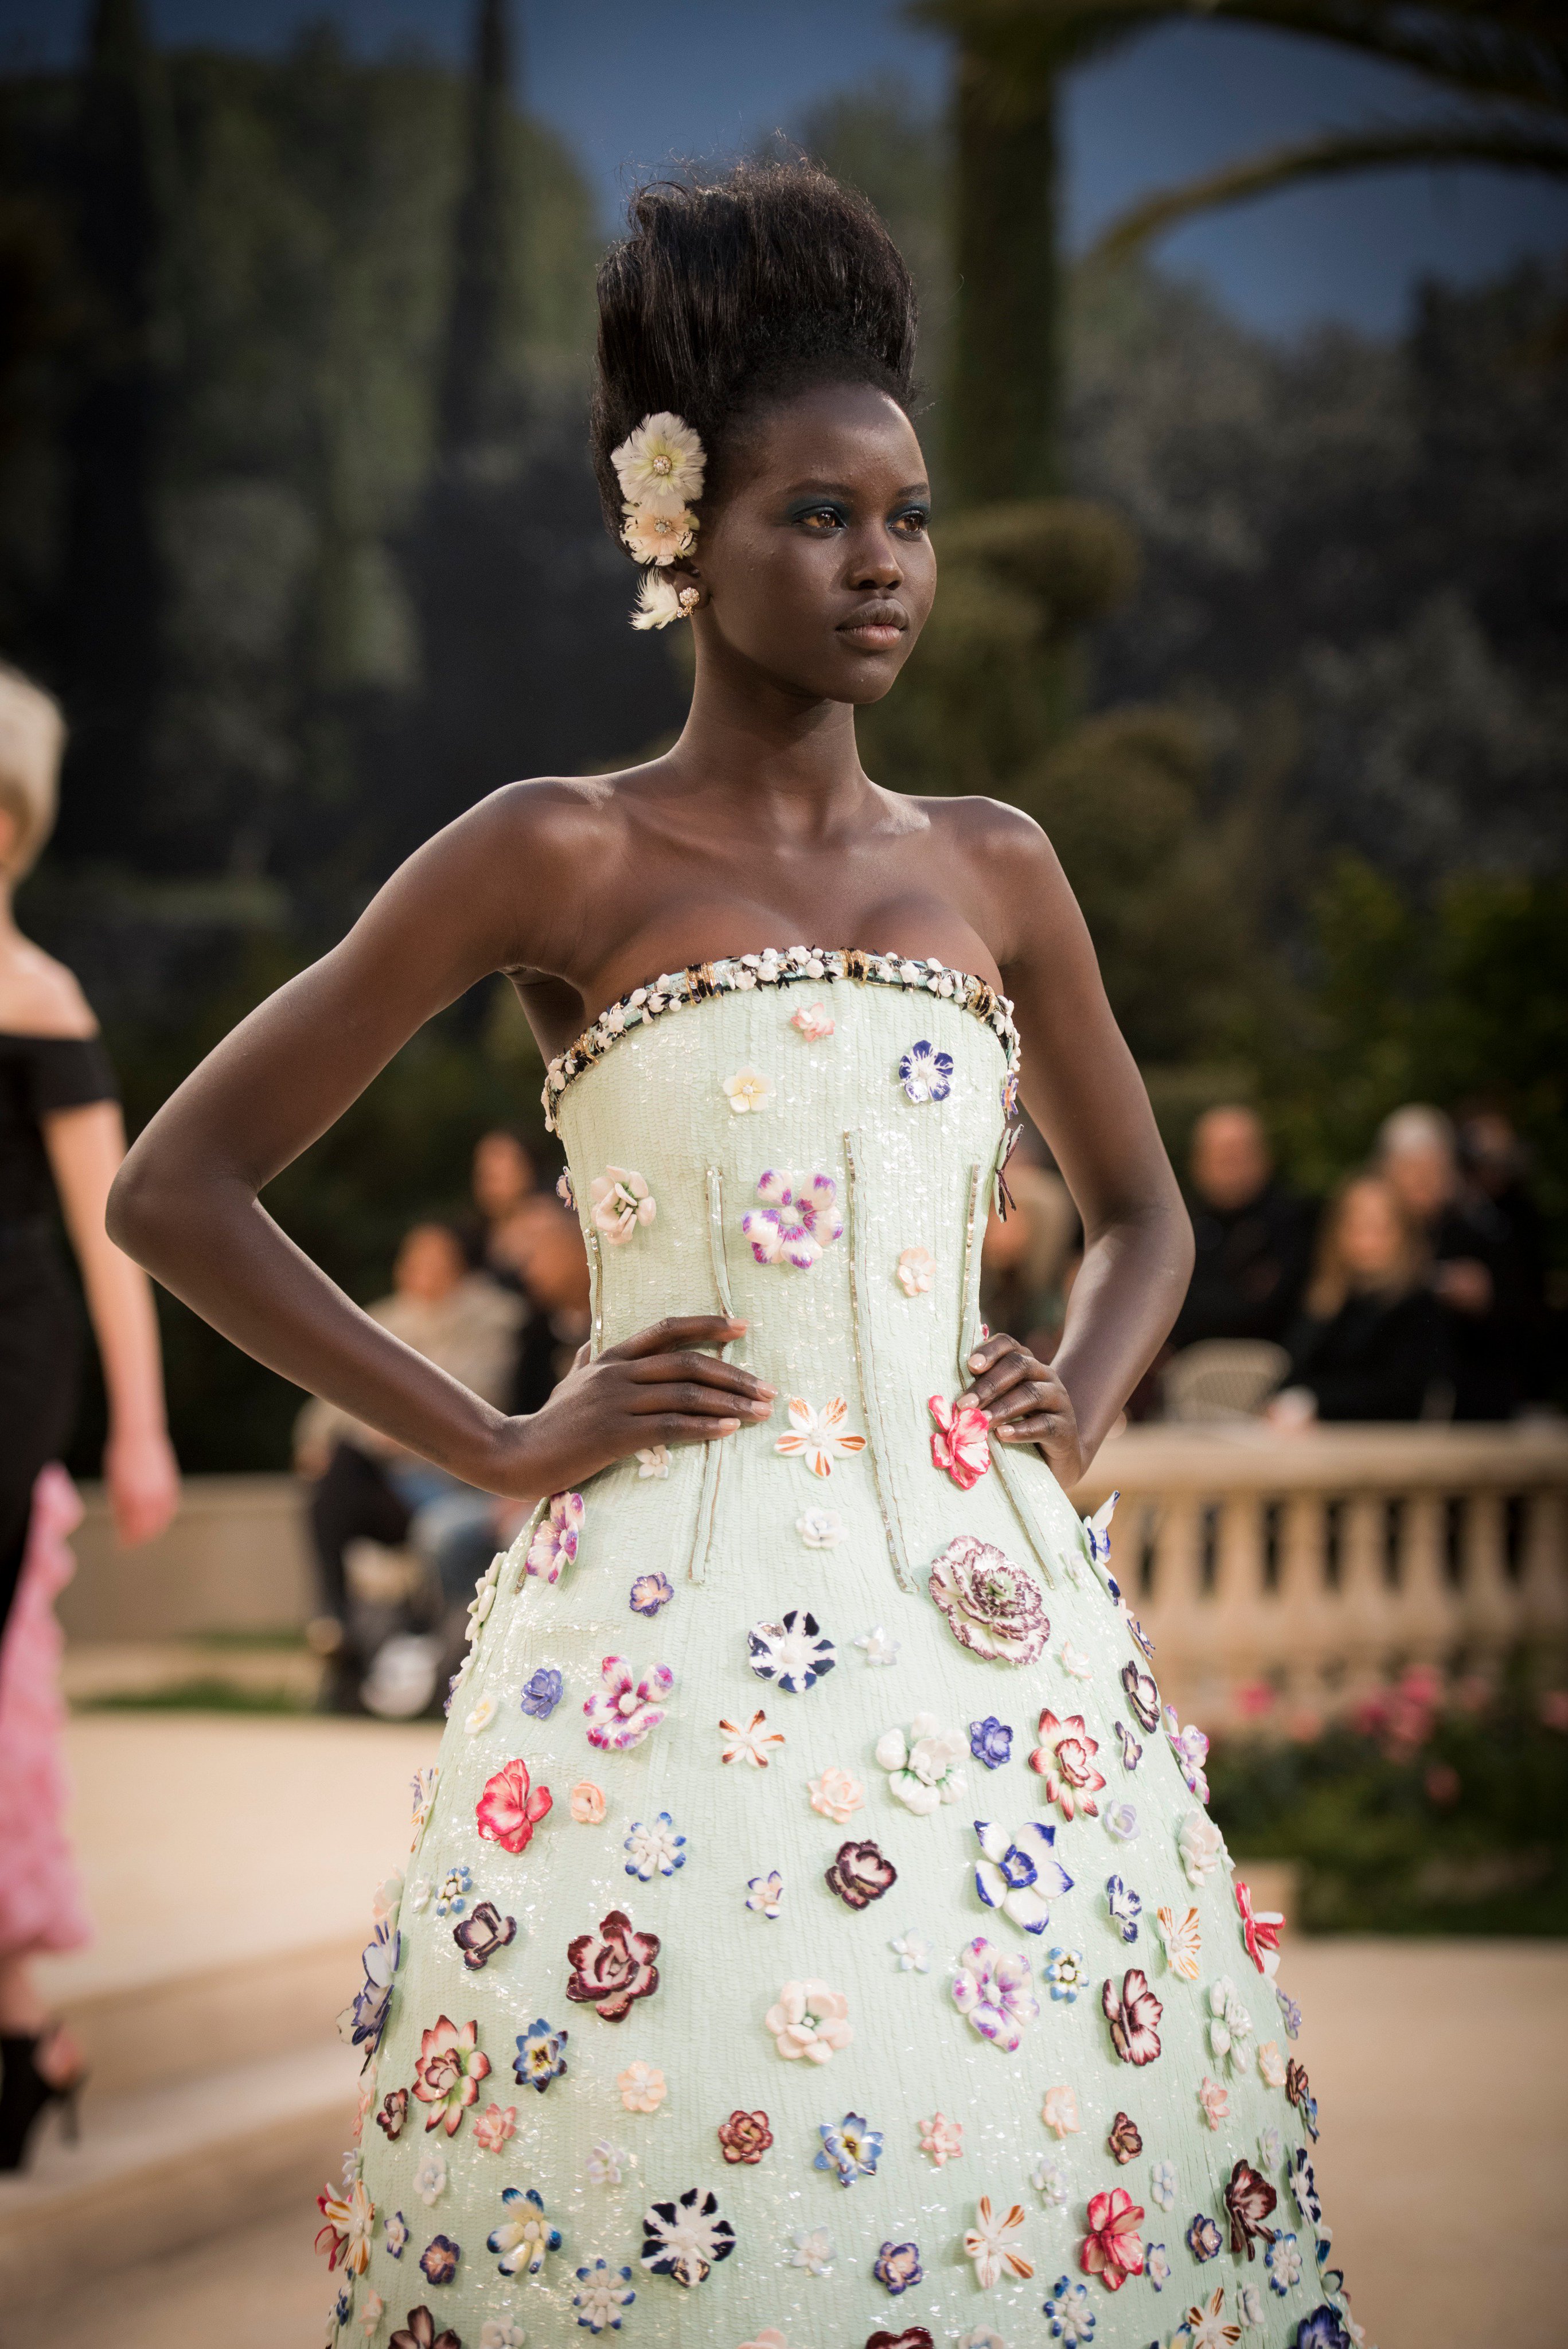 Eye On Design: Floral Appliquéd Evening Dress By House of Chanel